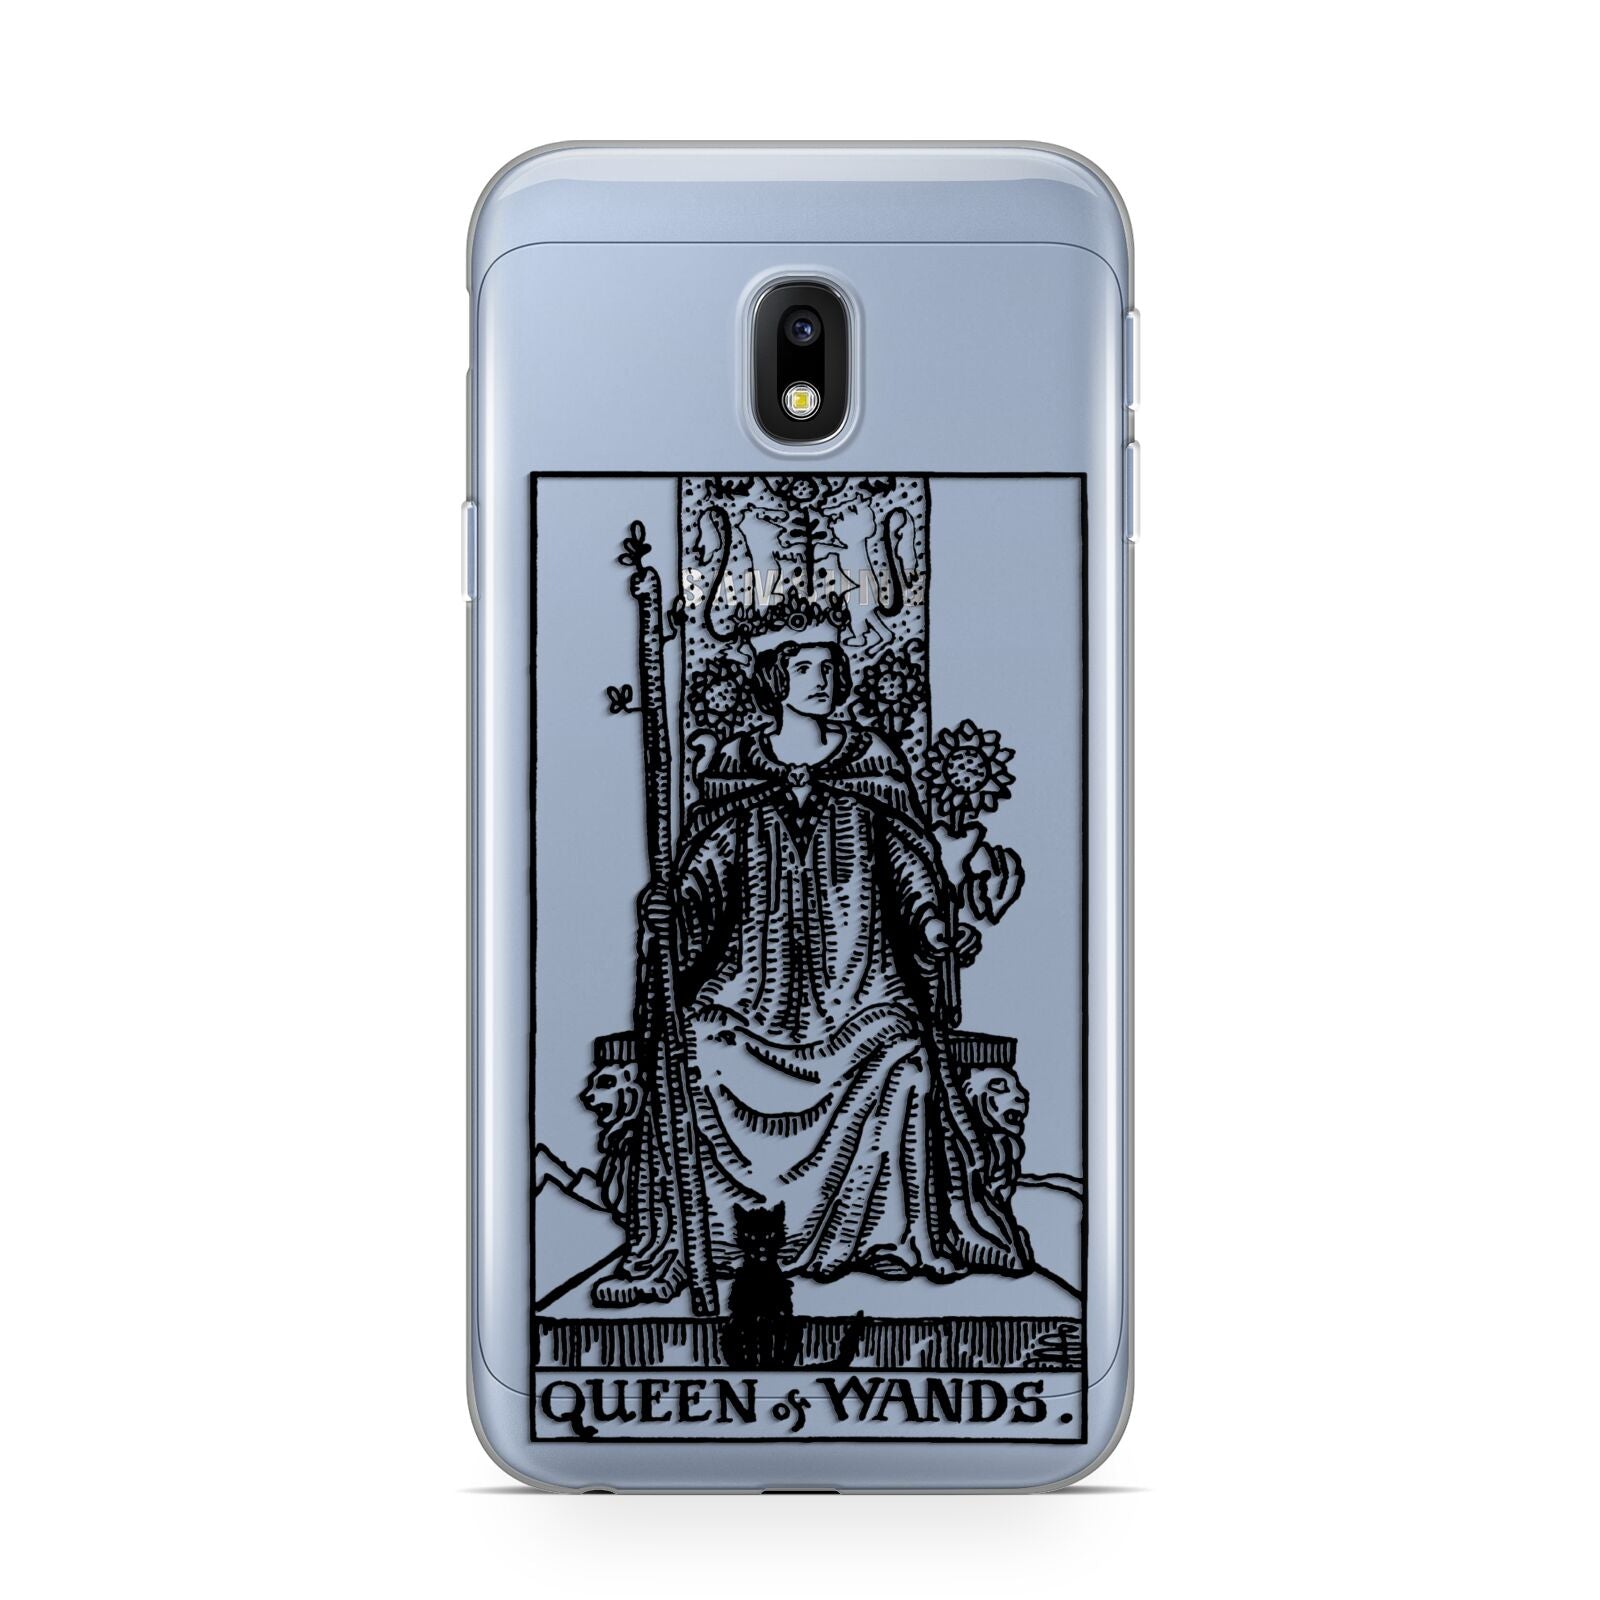 Queen of Wands Monochrome Samsung Galaxy J3 2017 Case